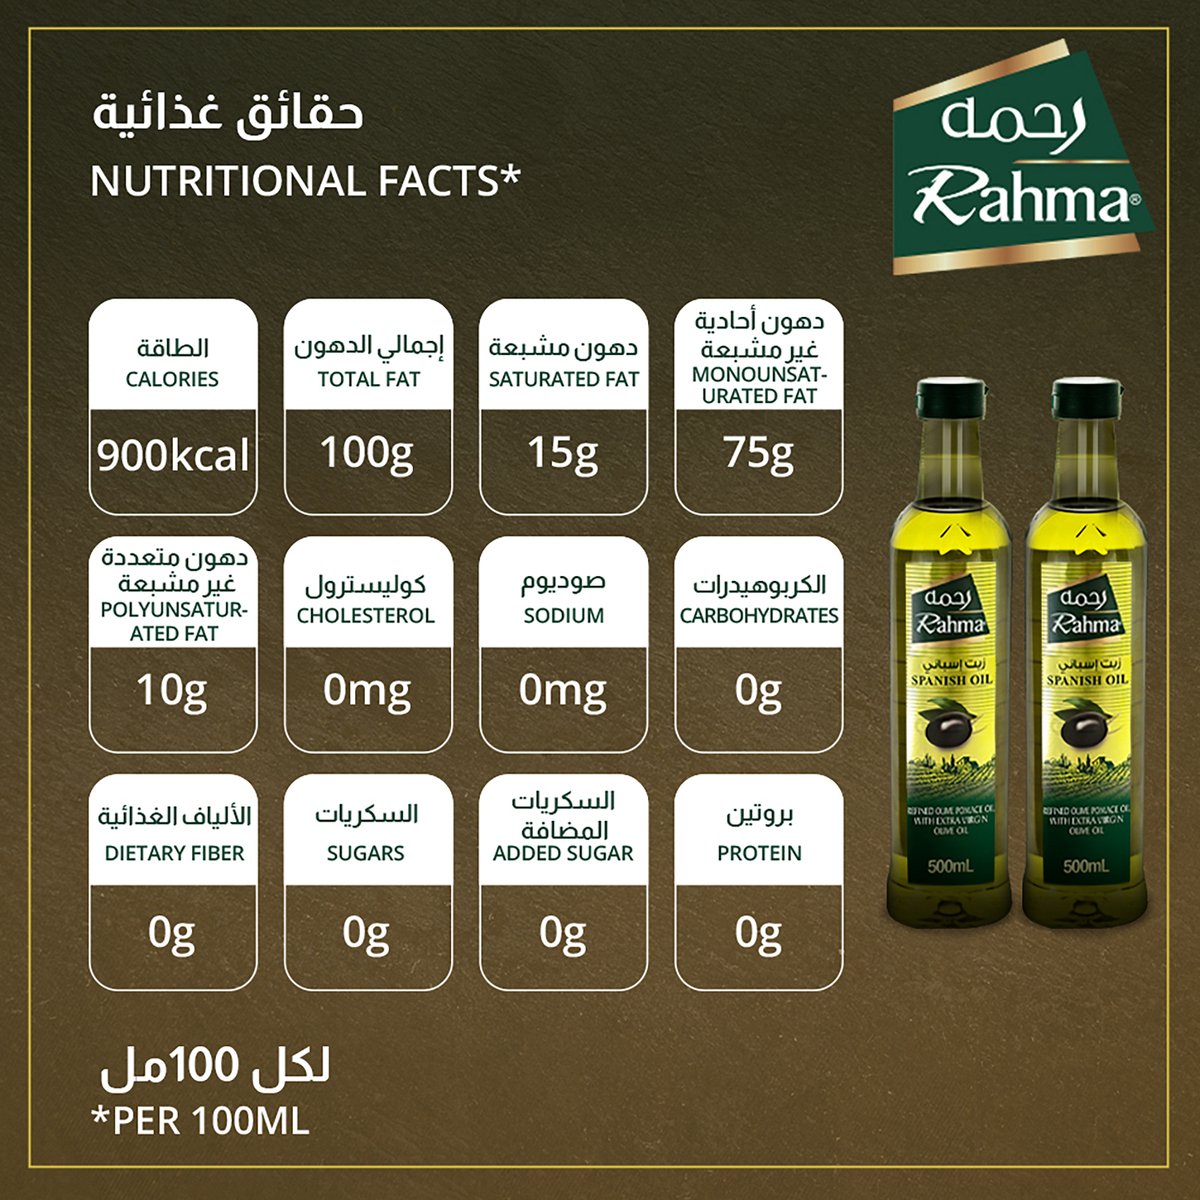 Rahma Spanish Olive Oil Value Pack 2 x 500 ml